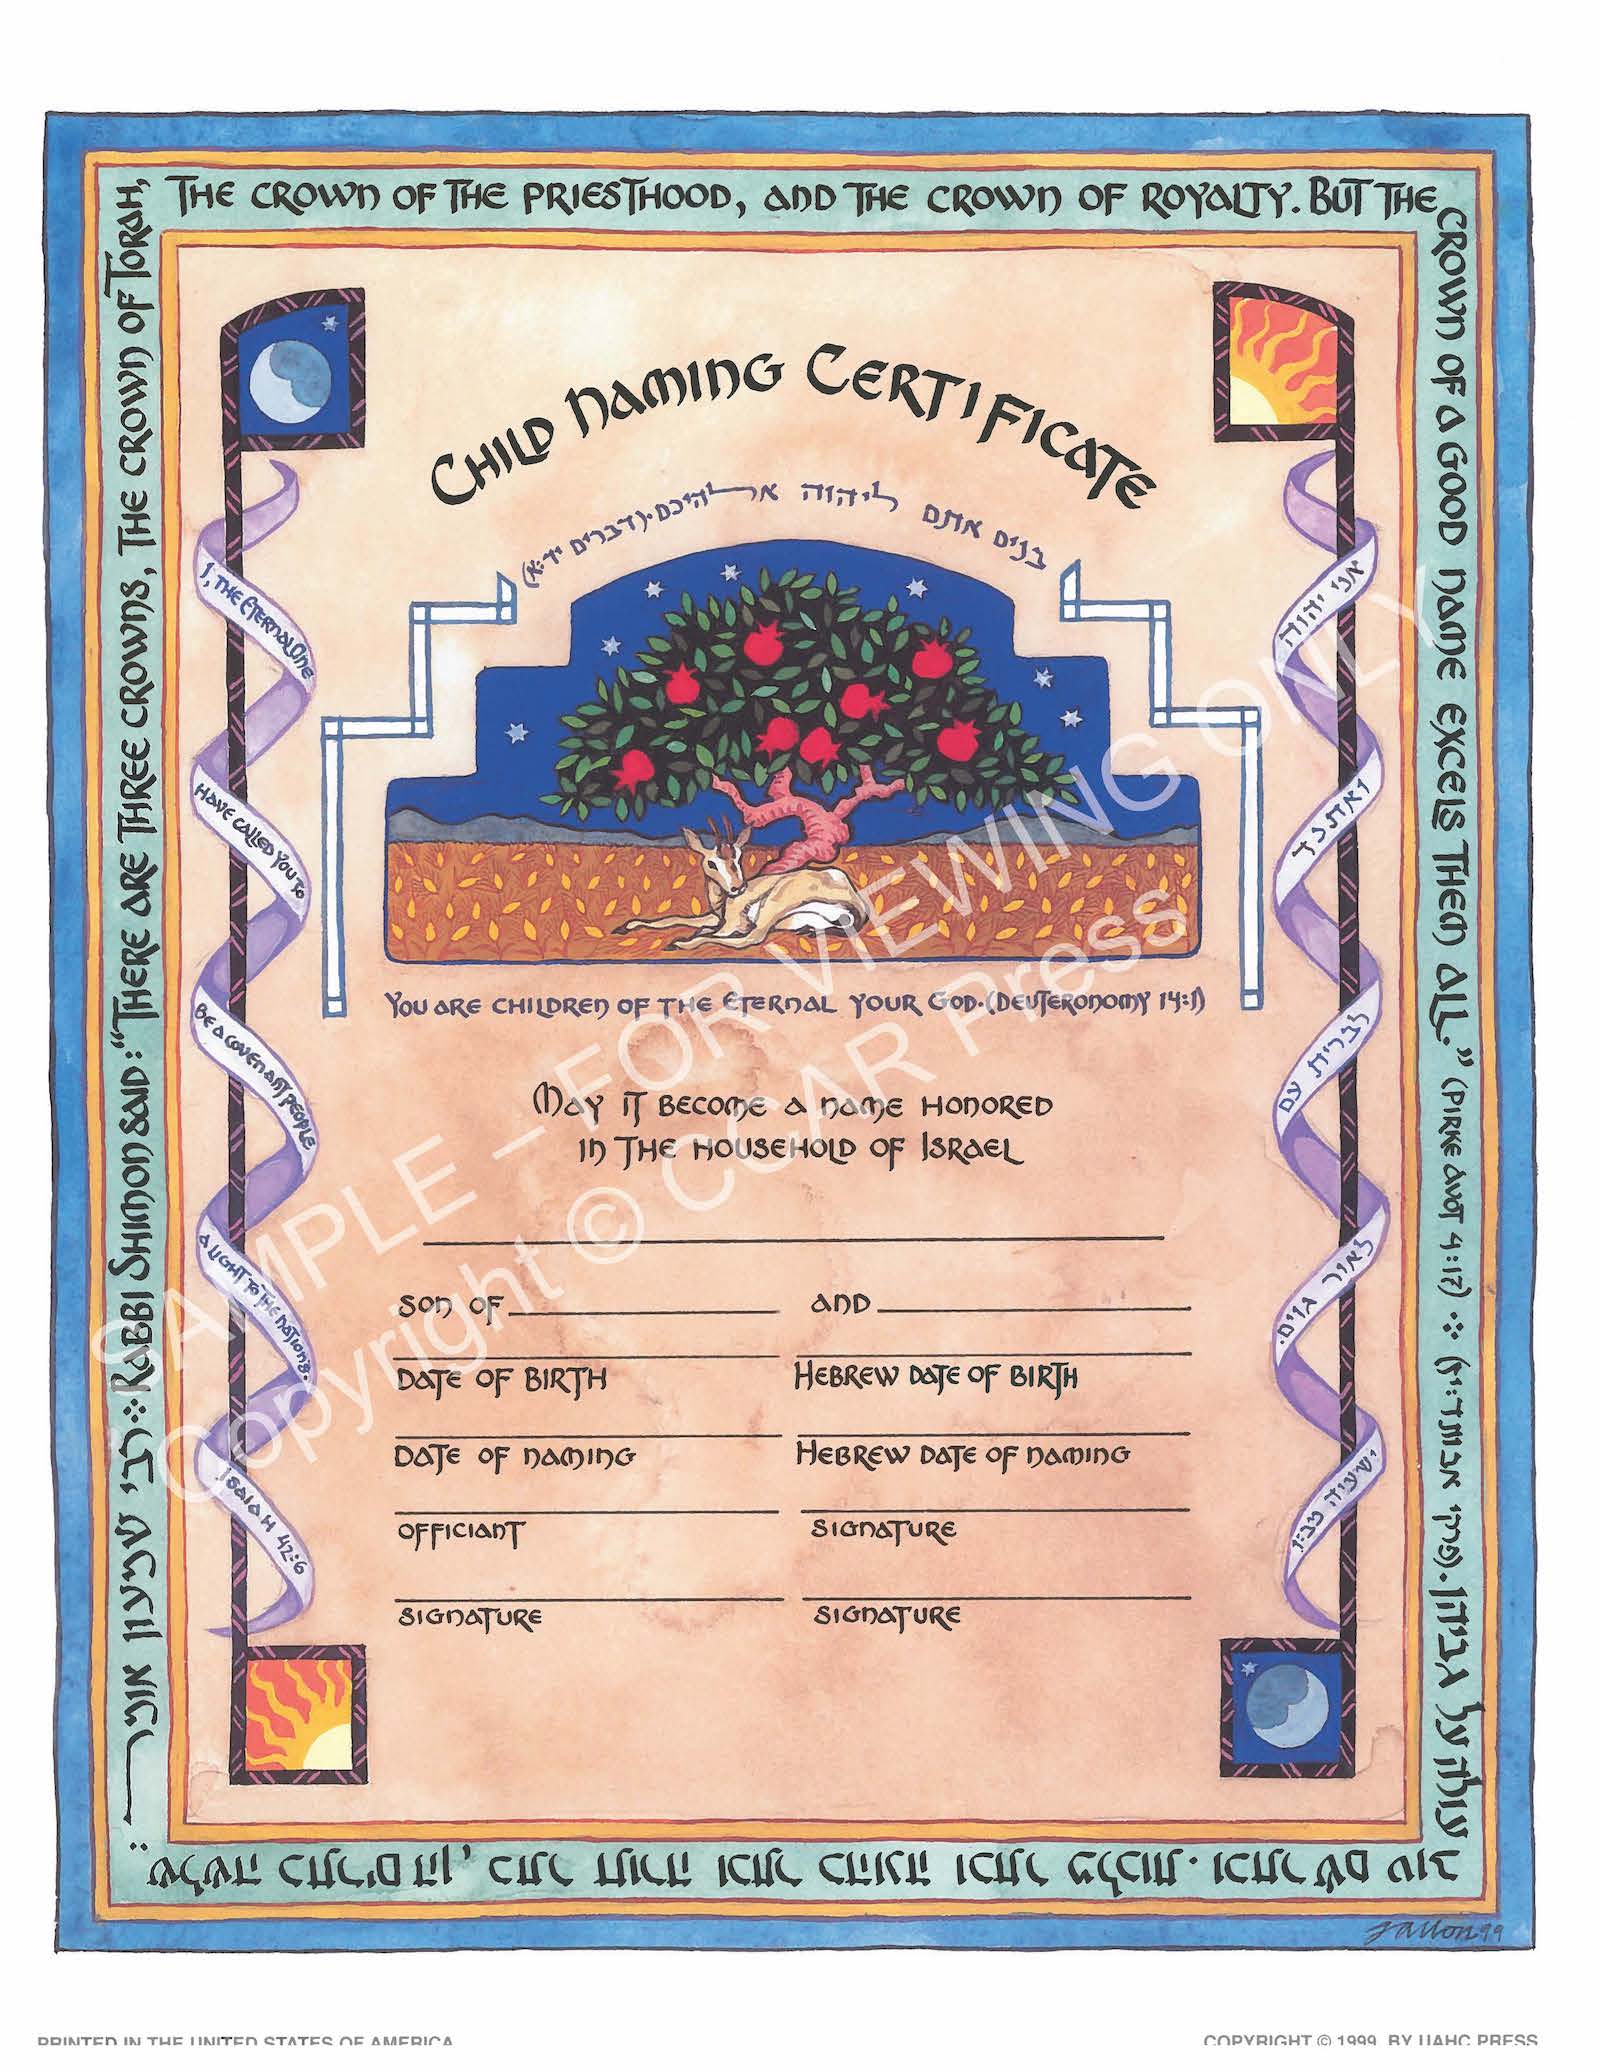 Child Naming, Boy: Single, Illuminated - Certificate